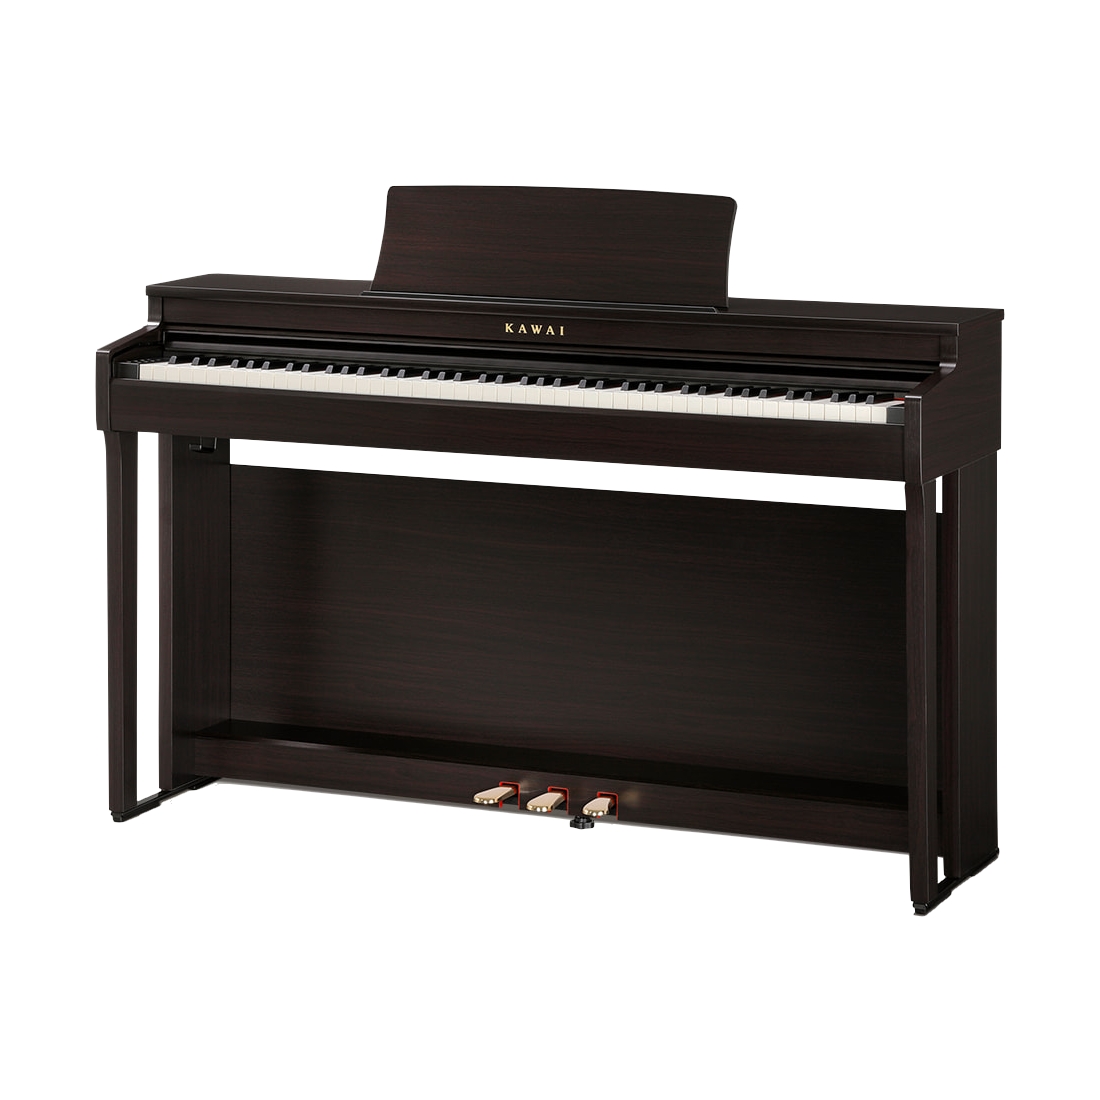 KAWAI CN201 R - цифровое пианино, механика Responsive Hammer III, 88 клавиш, цвет палисандр. купить в prostore.me